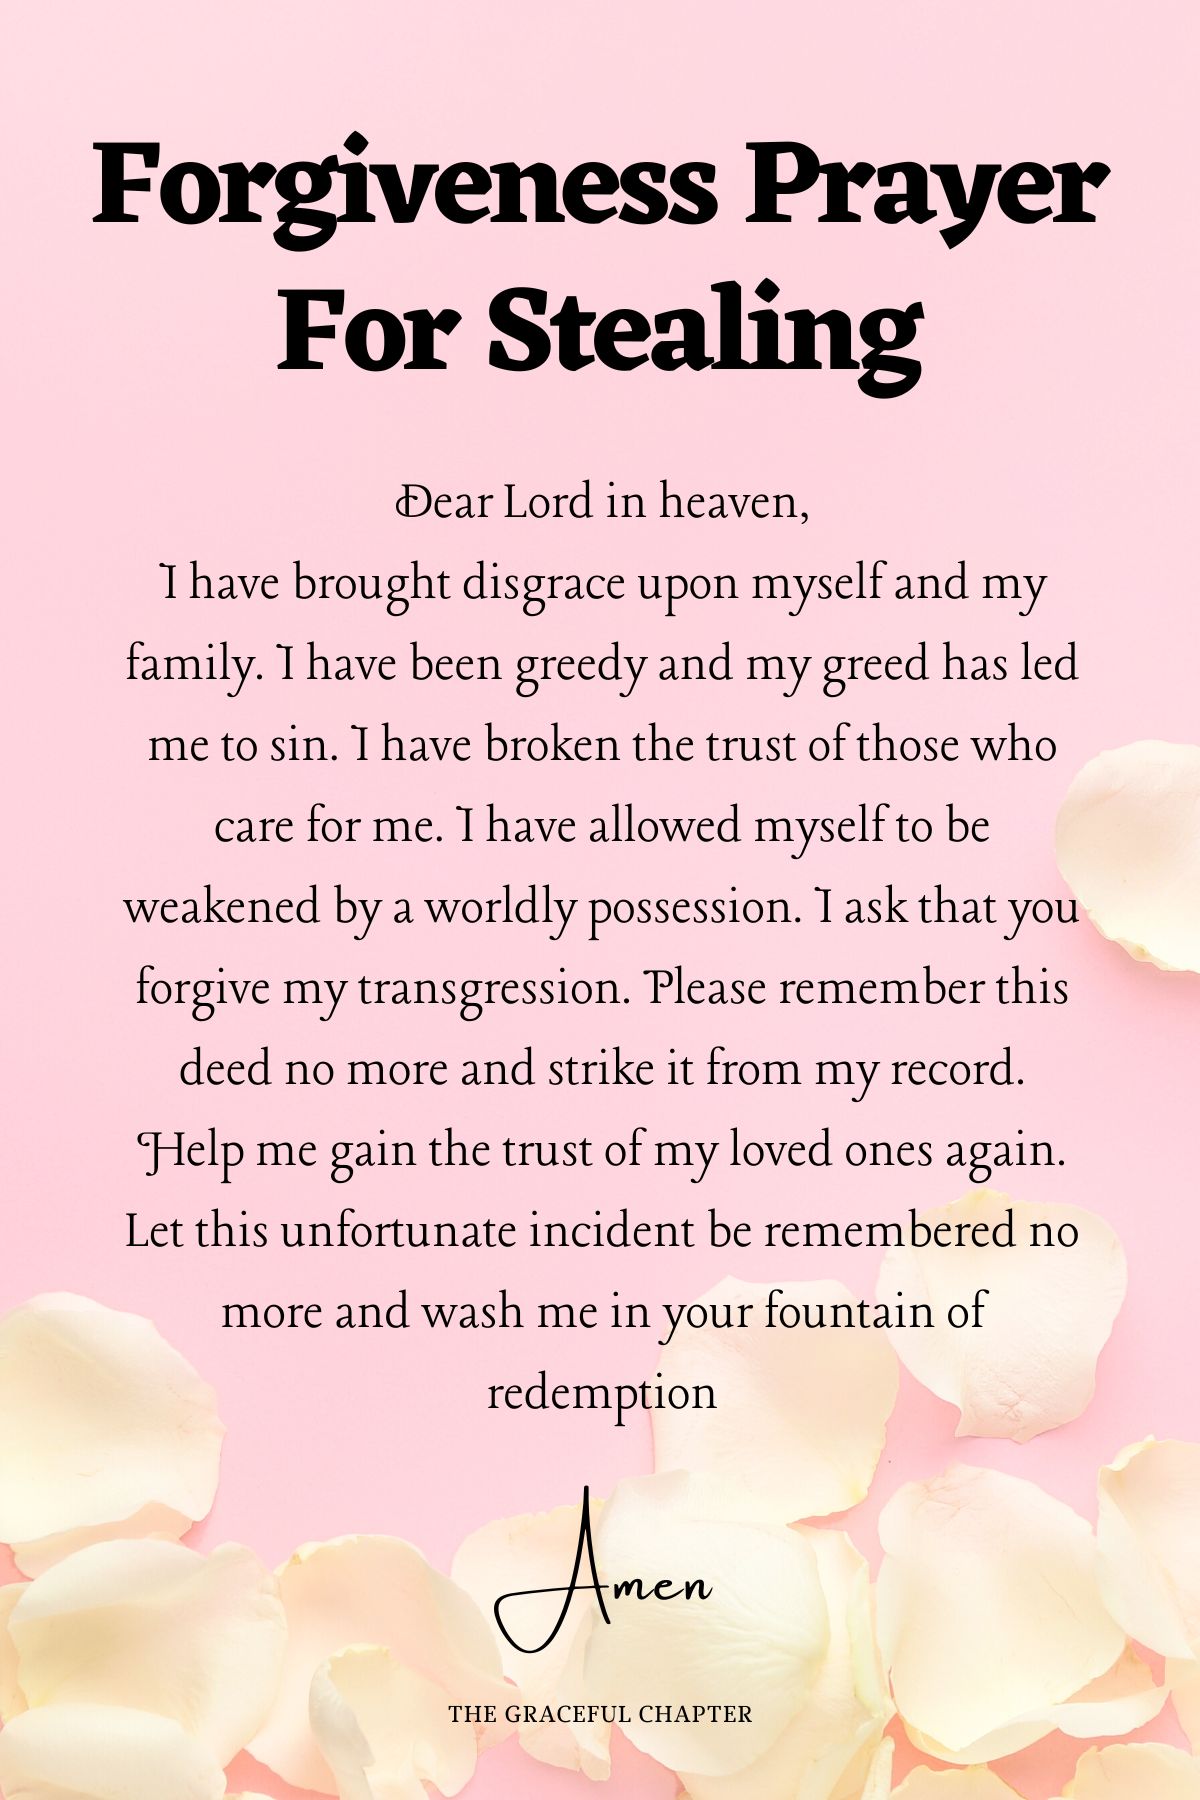 Forgiveness prayer for stealing